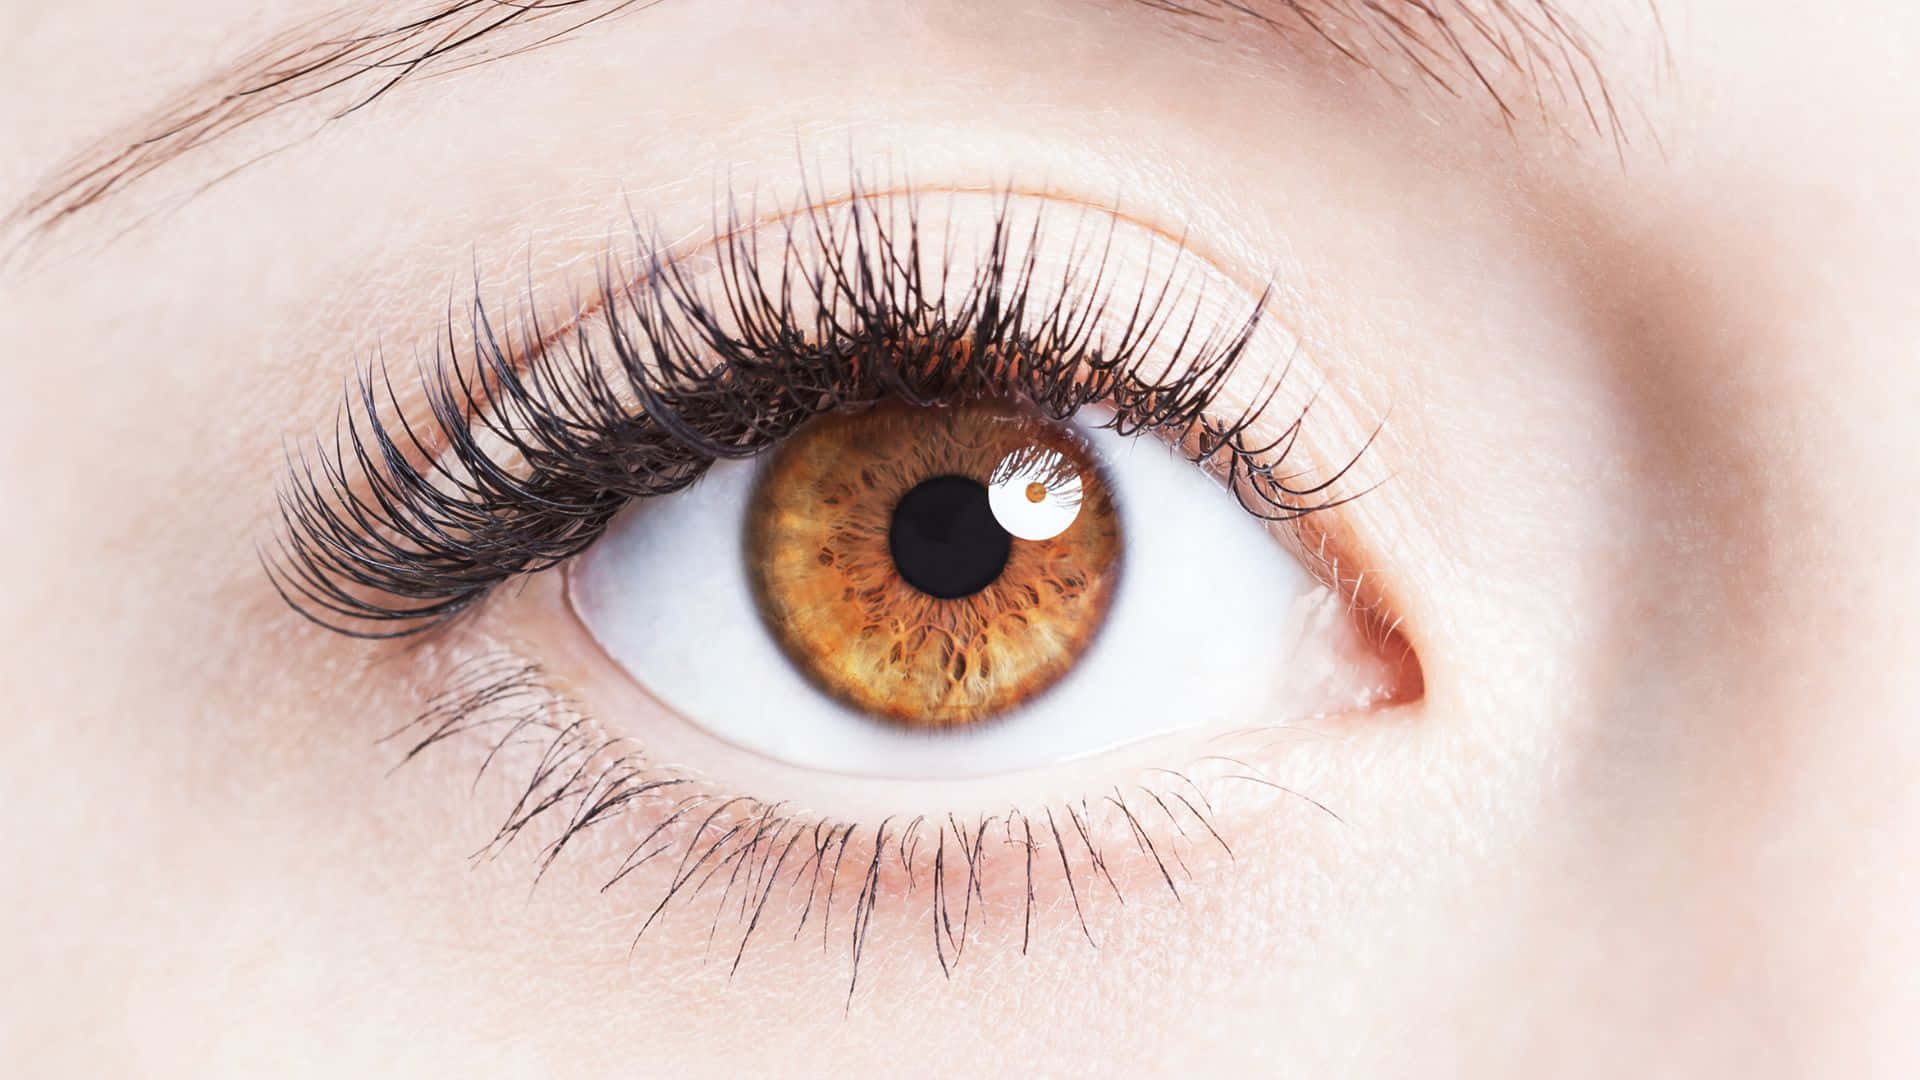 A close-up of a human eye.